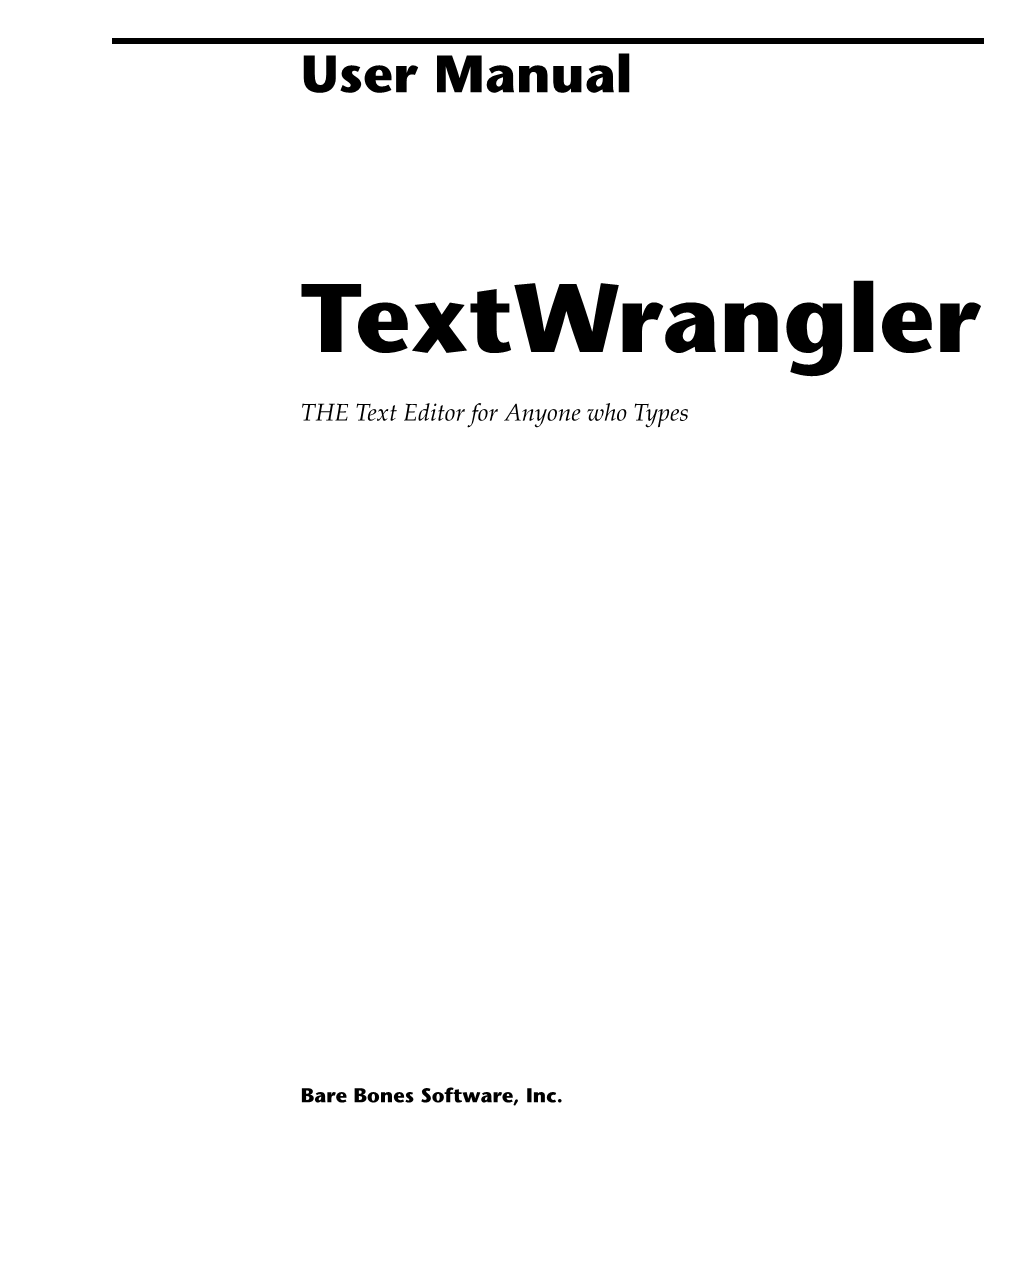 Textwrangler 3.0 User Manual